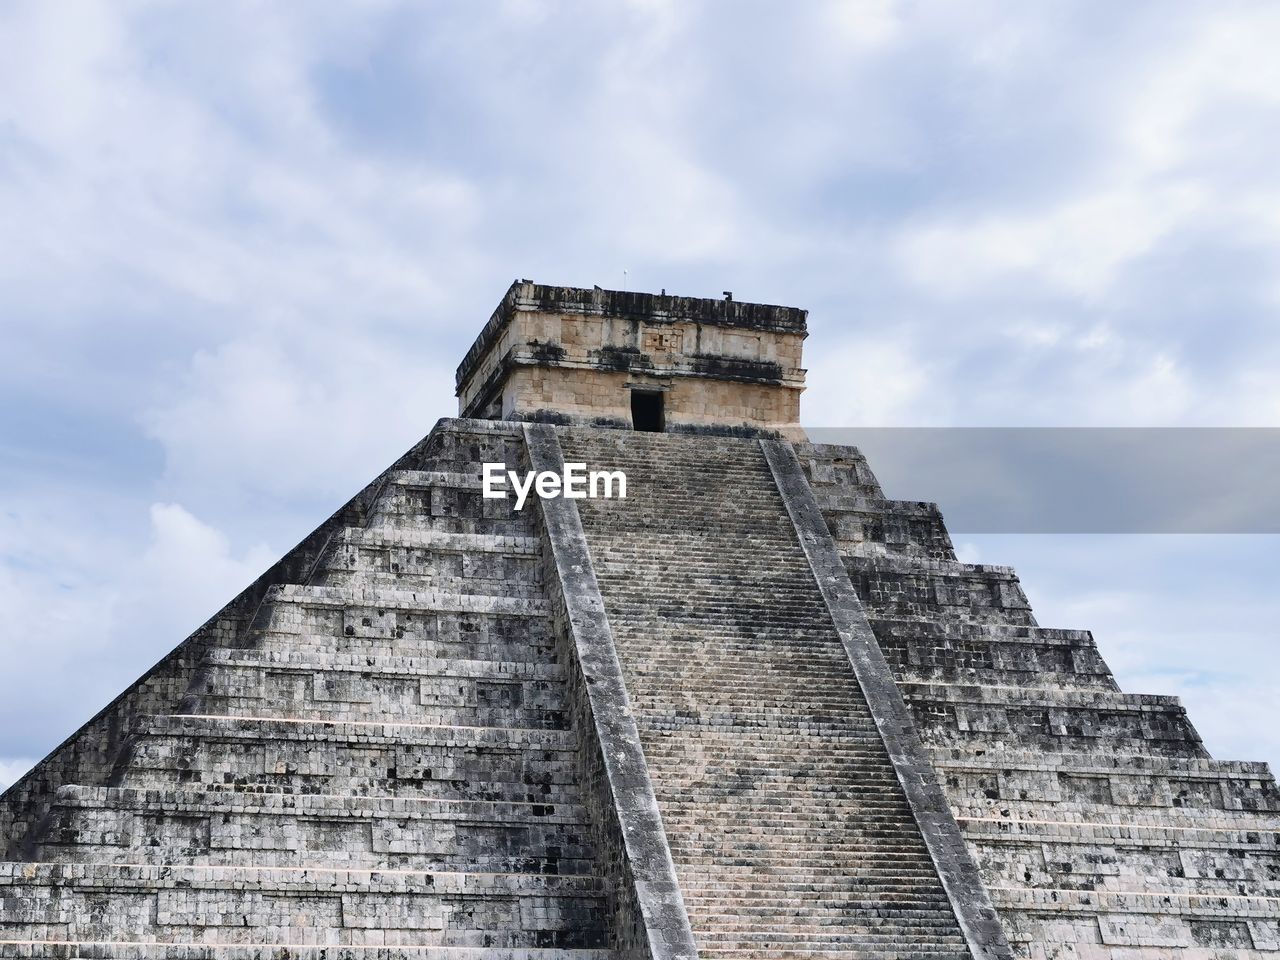 Pyramid of kukulcan